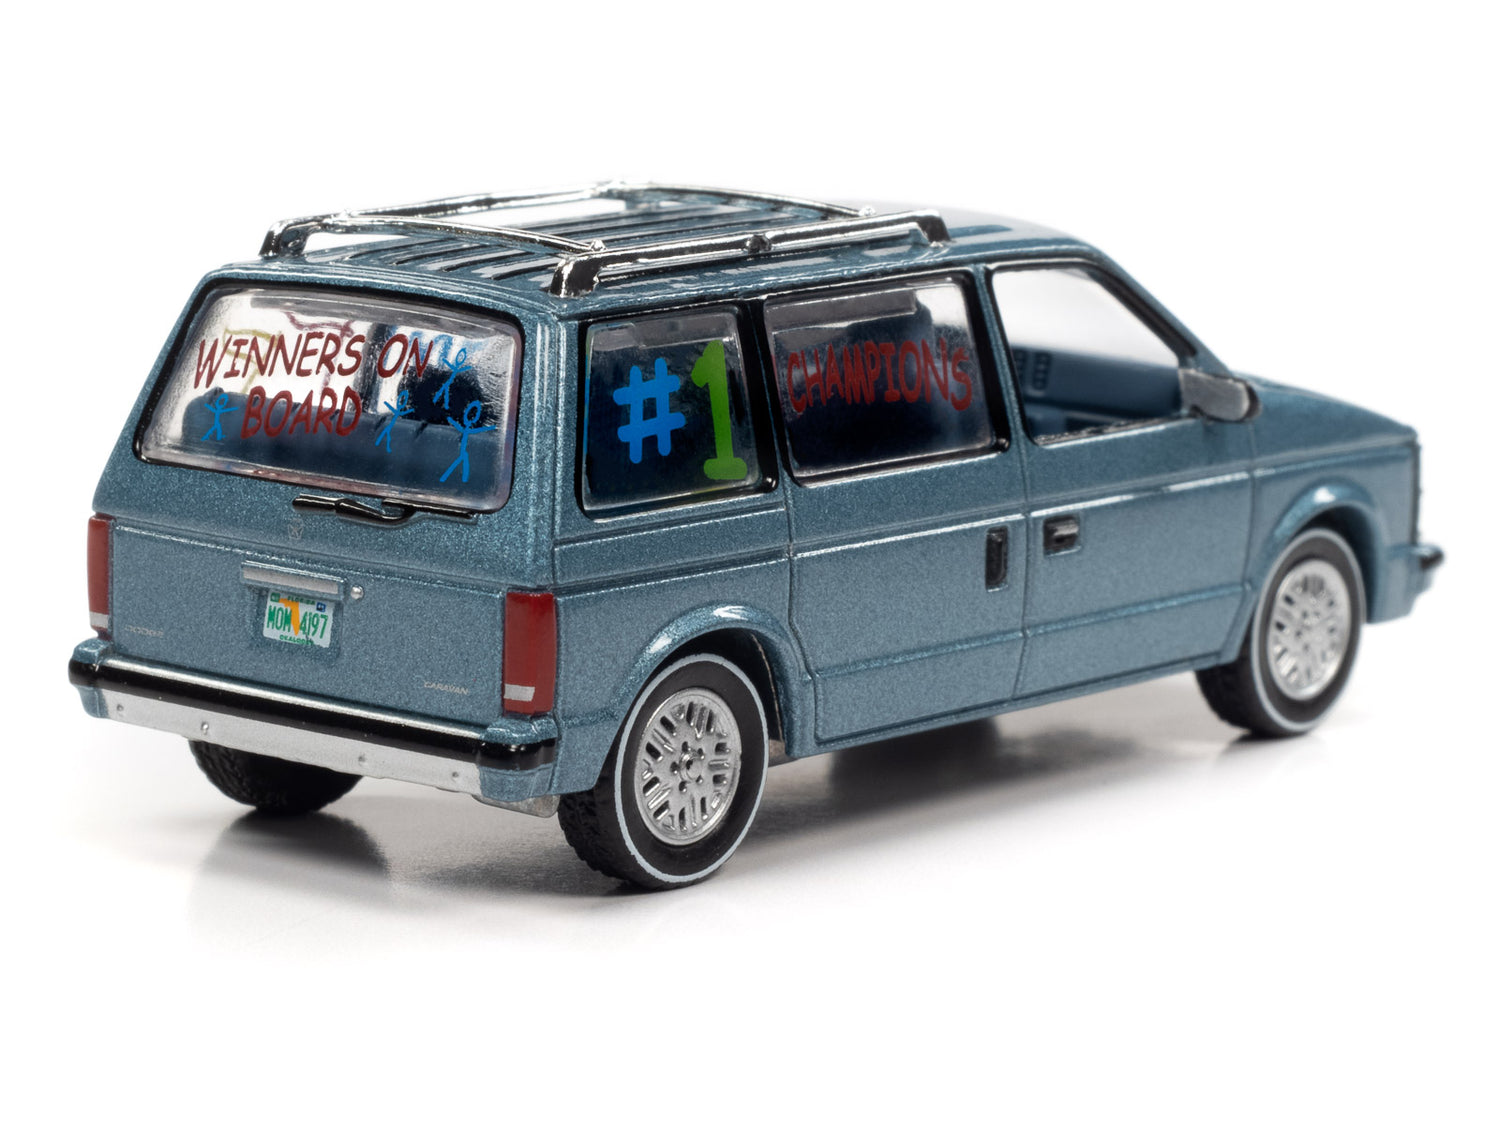 Auto World Worlds Best Mom 1984 Dodge Caravan w/Base & Trading Card (Silver/Blue) 1:64 Scale Diecast